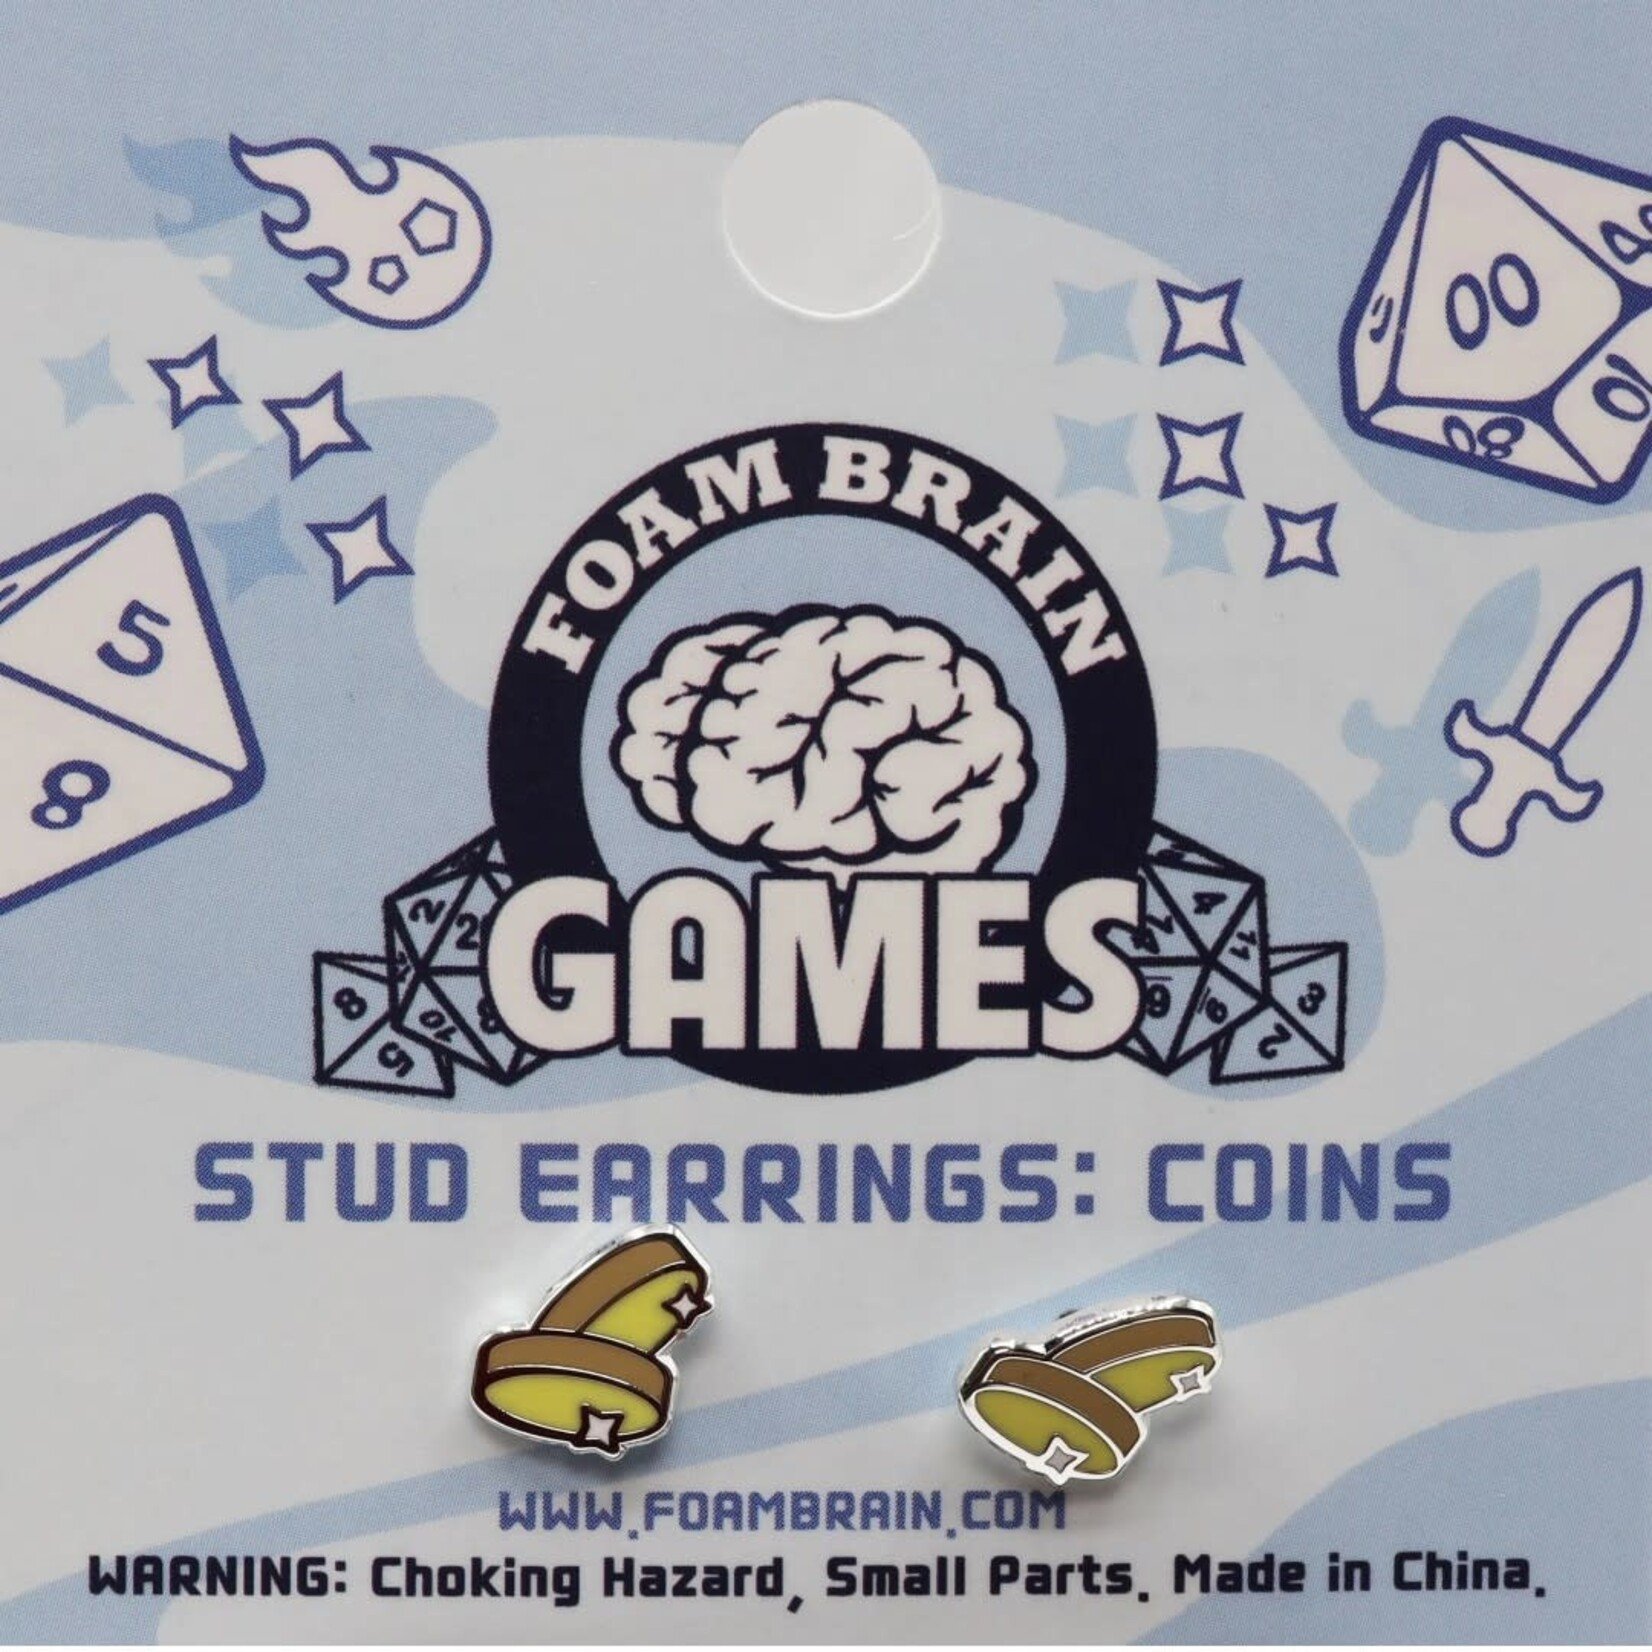 Foam Brain Games Stud Earrings Coins